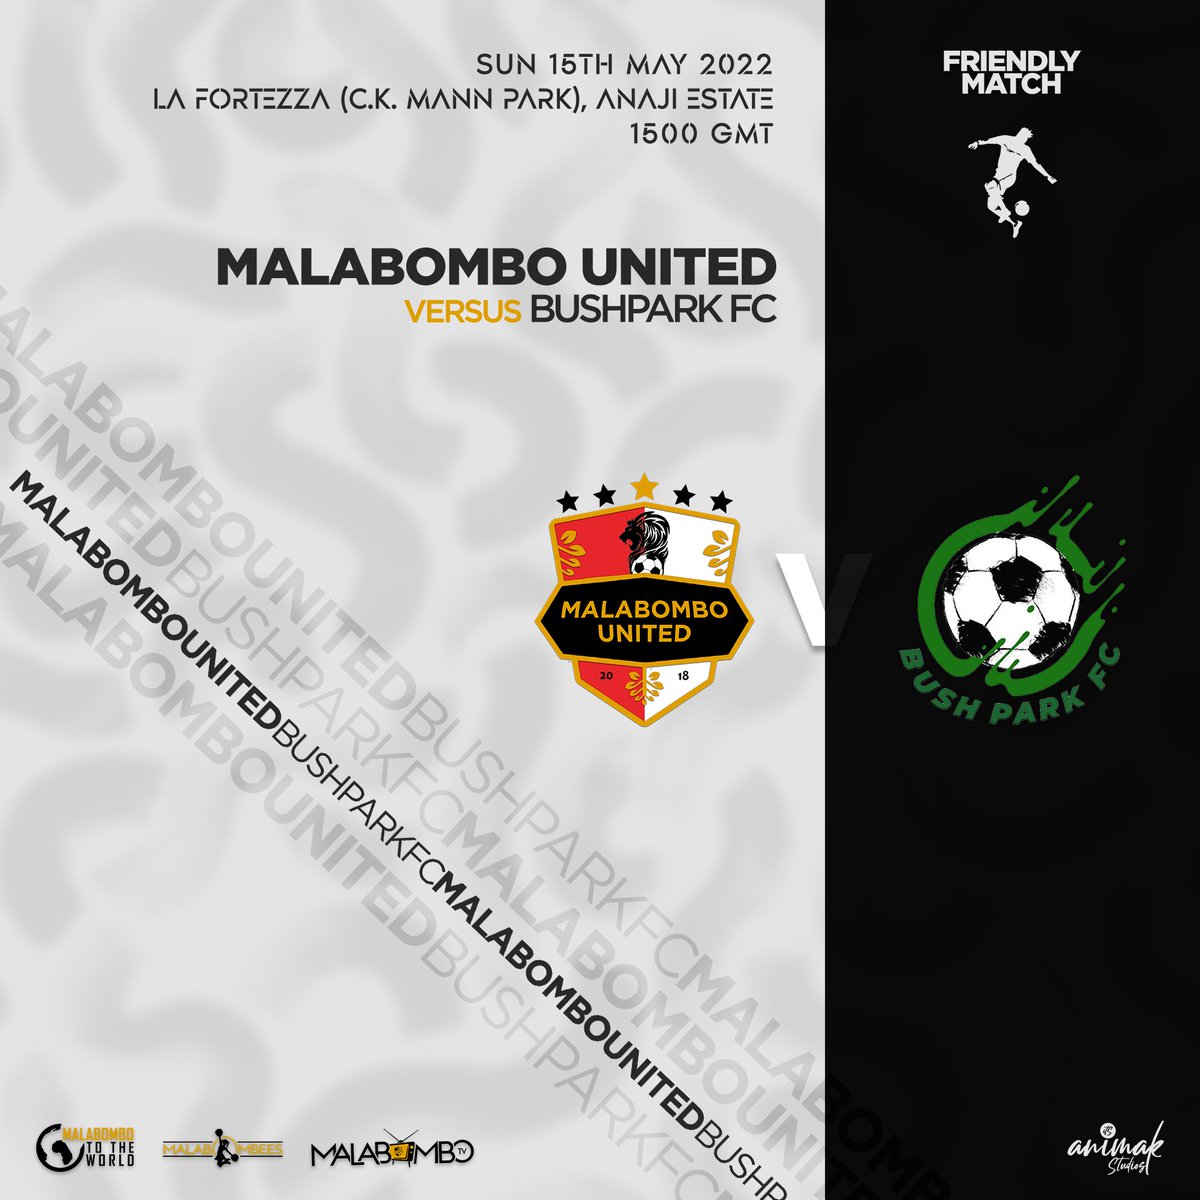 First Match of the Year!!!
Let's go lads 🔥🔥🔥

@malabombo_utd vrs BushPark FC

#malabombo2theworld 
#lafortezzaAnaji
#1300GMT
#15thMay